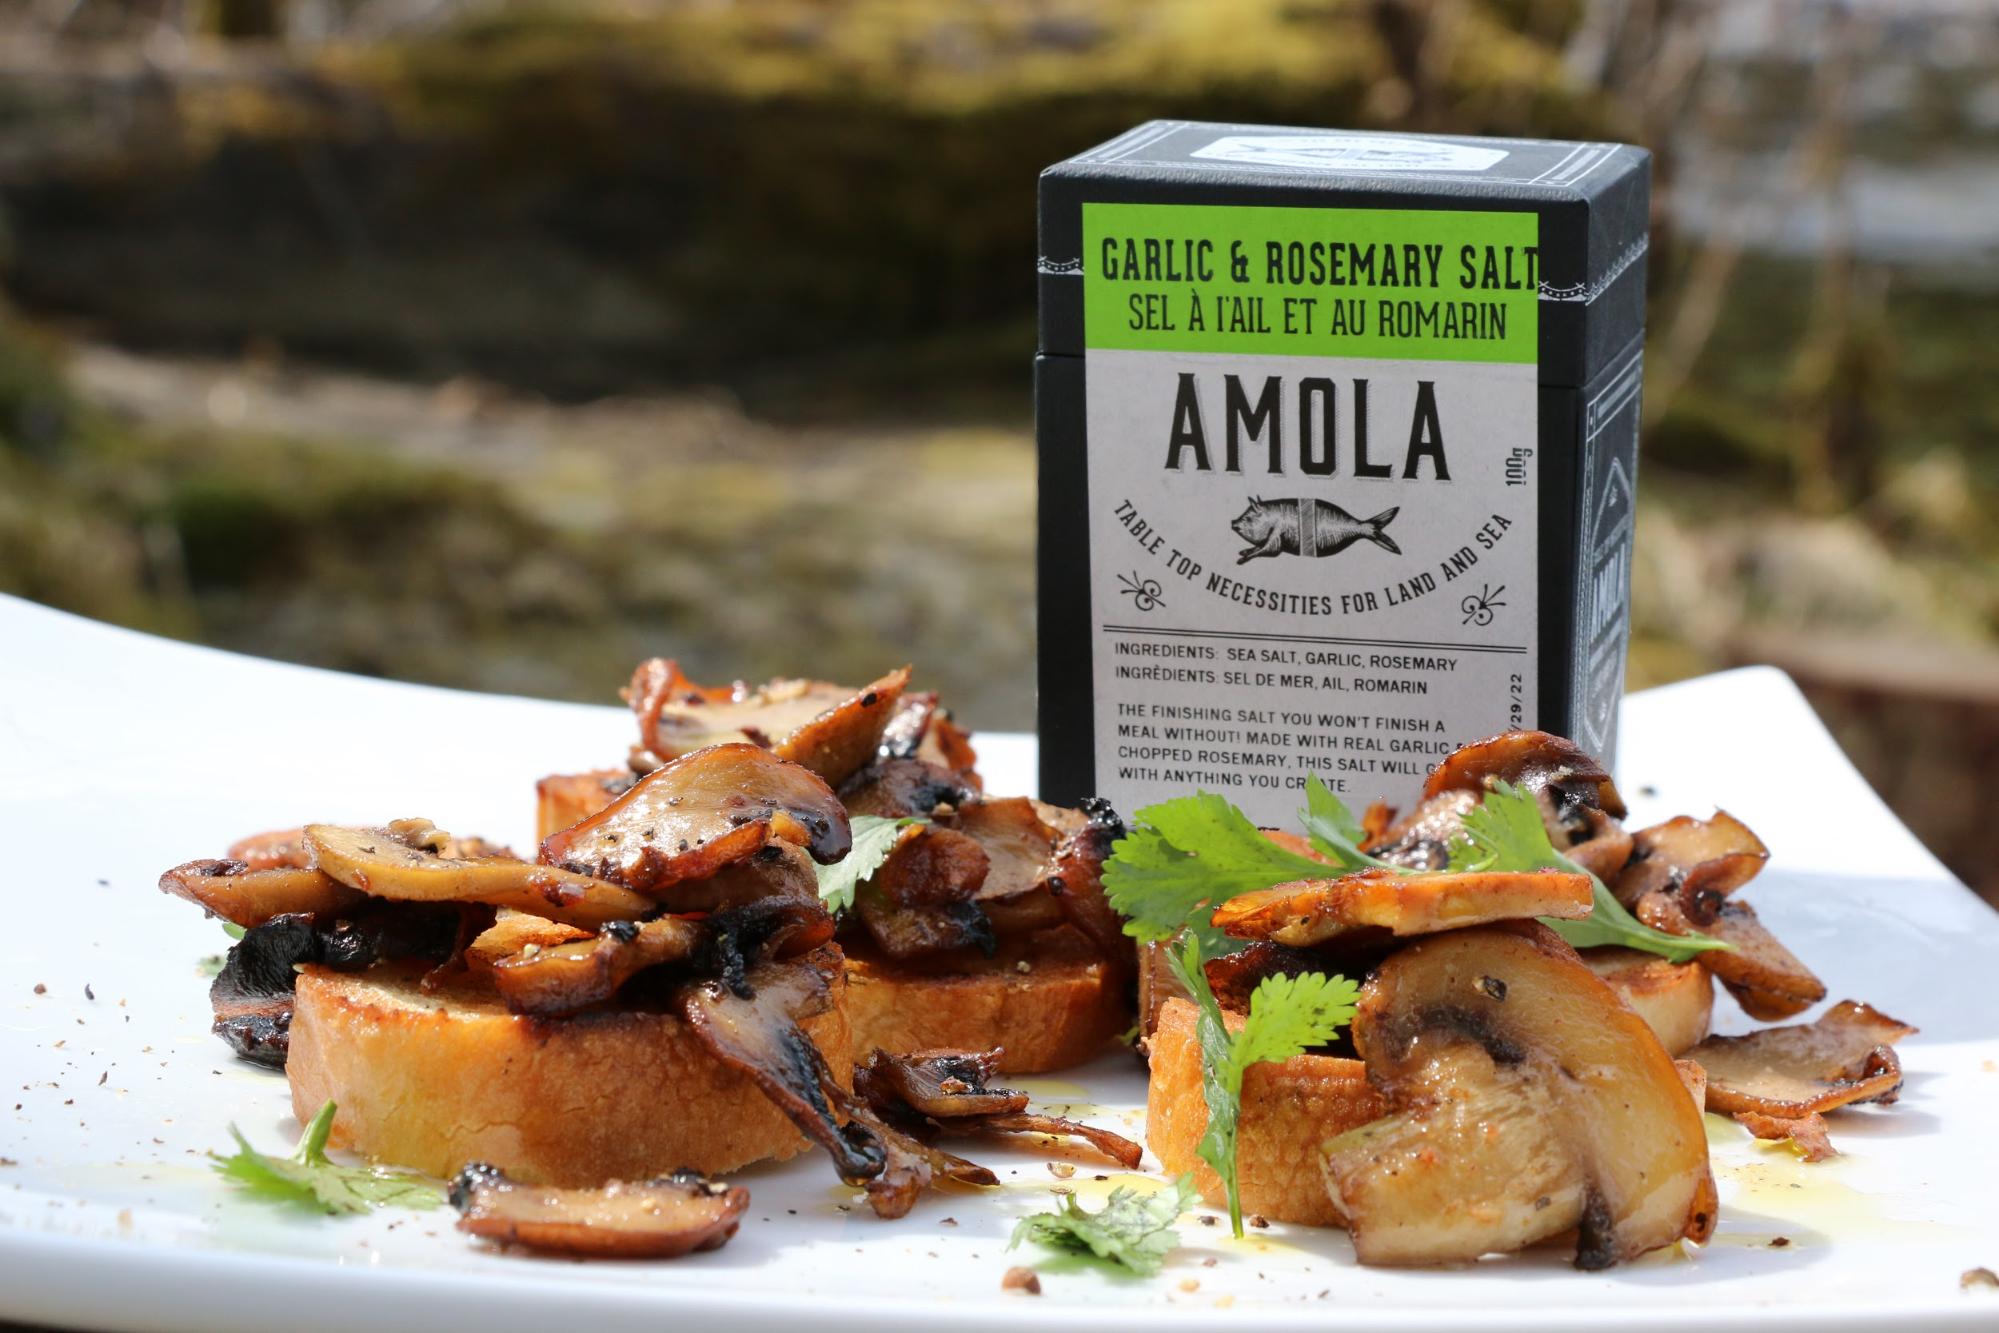 Garlic & Rosemary Mushroom Crostini with a box of Amola salt